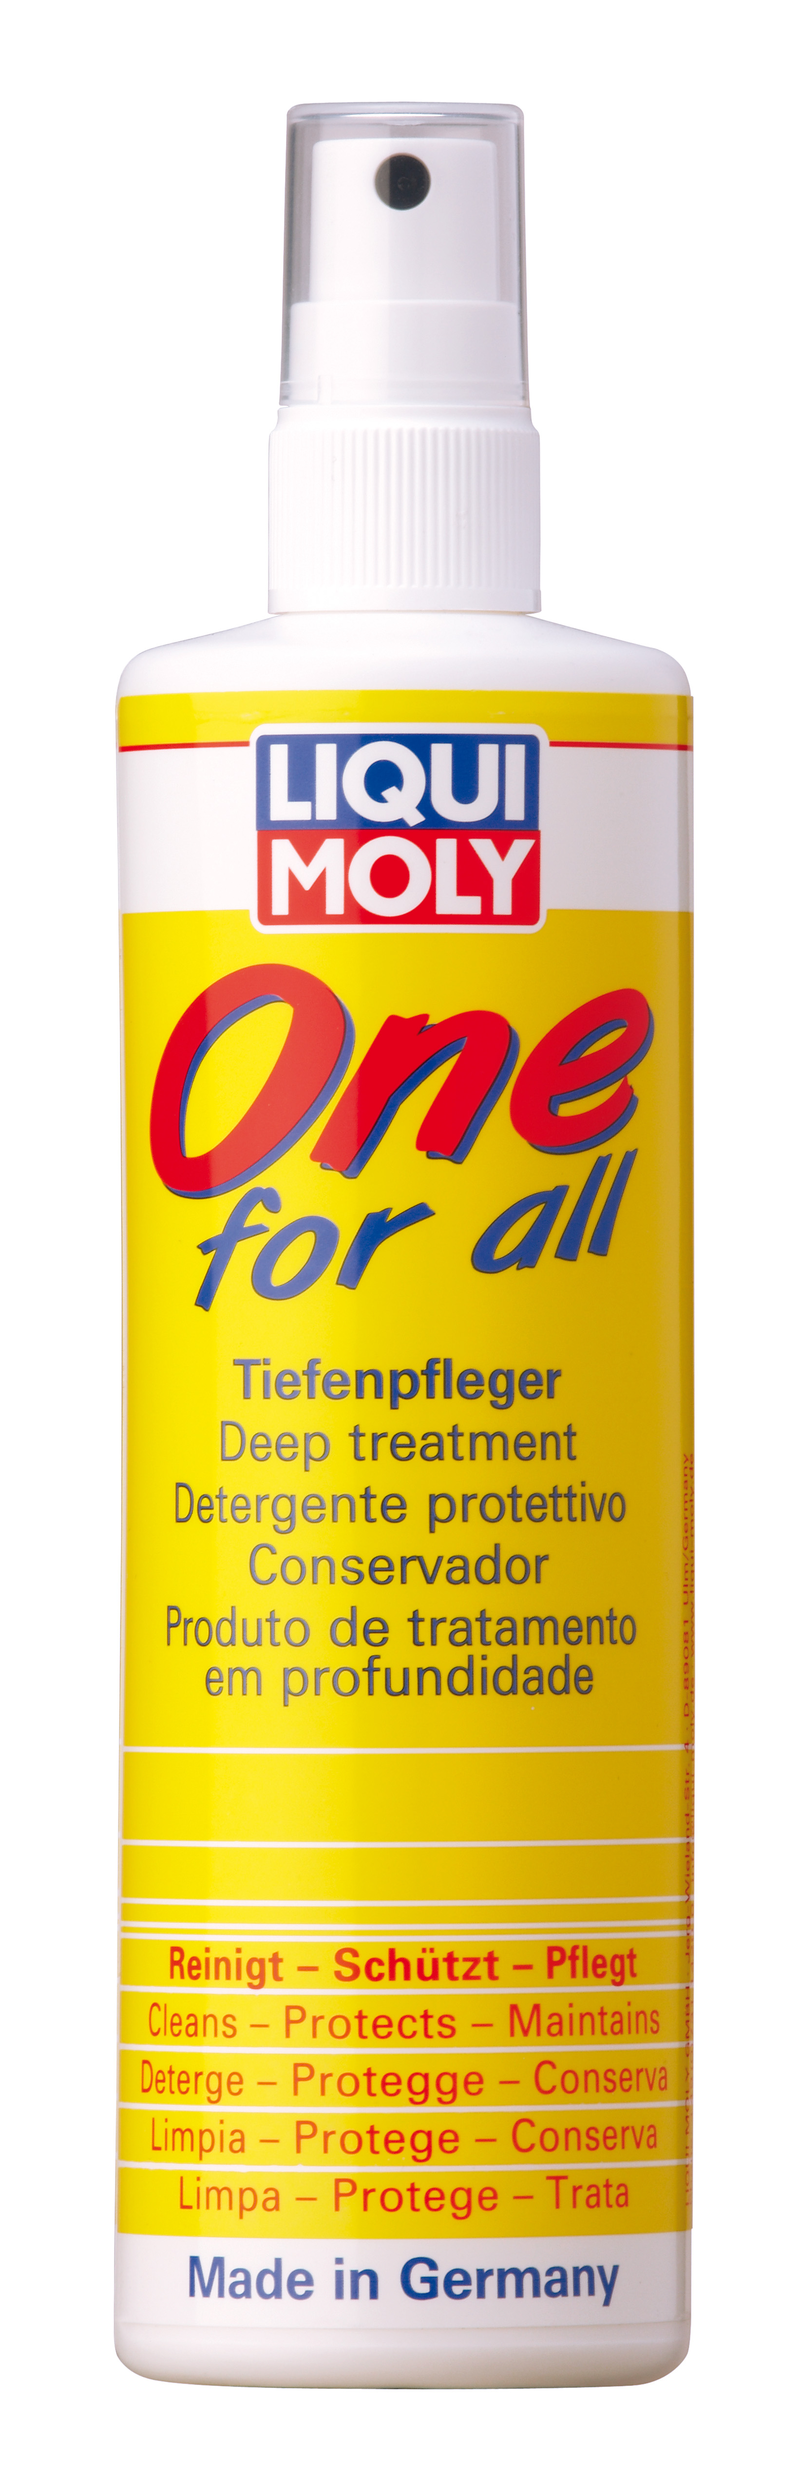 One for all Conservador (250 ML) Liqui Moly